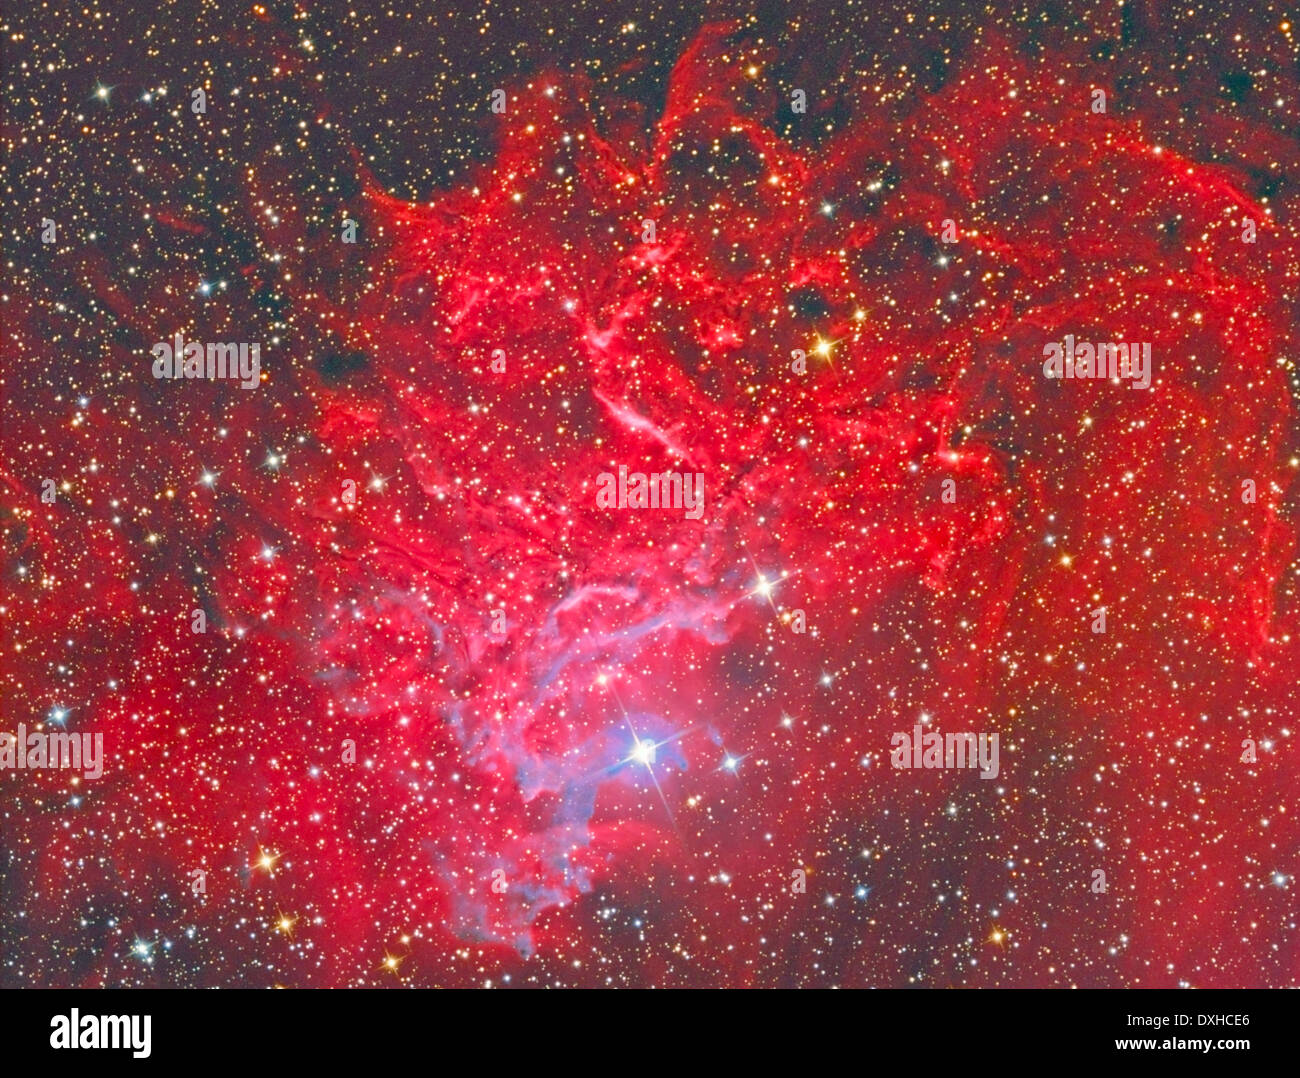 IC405 Flaming star nebula Foto Stock